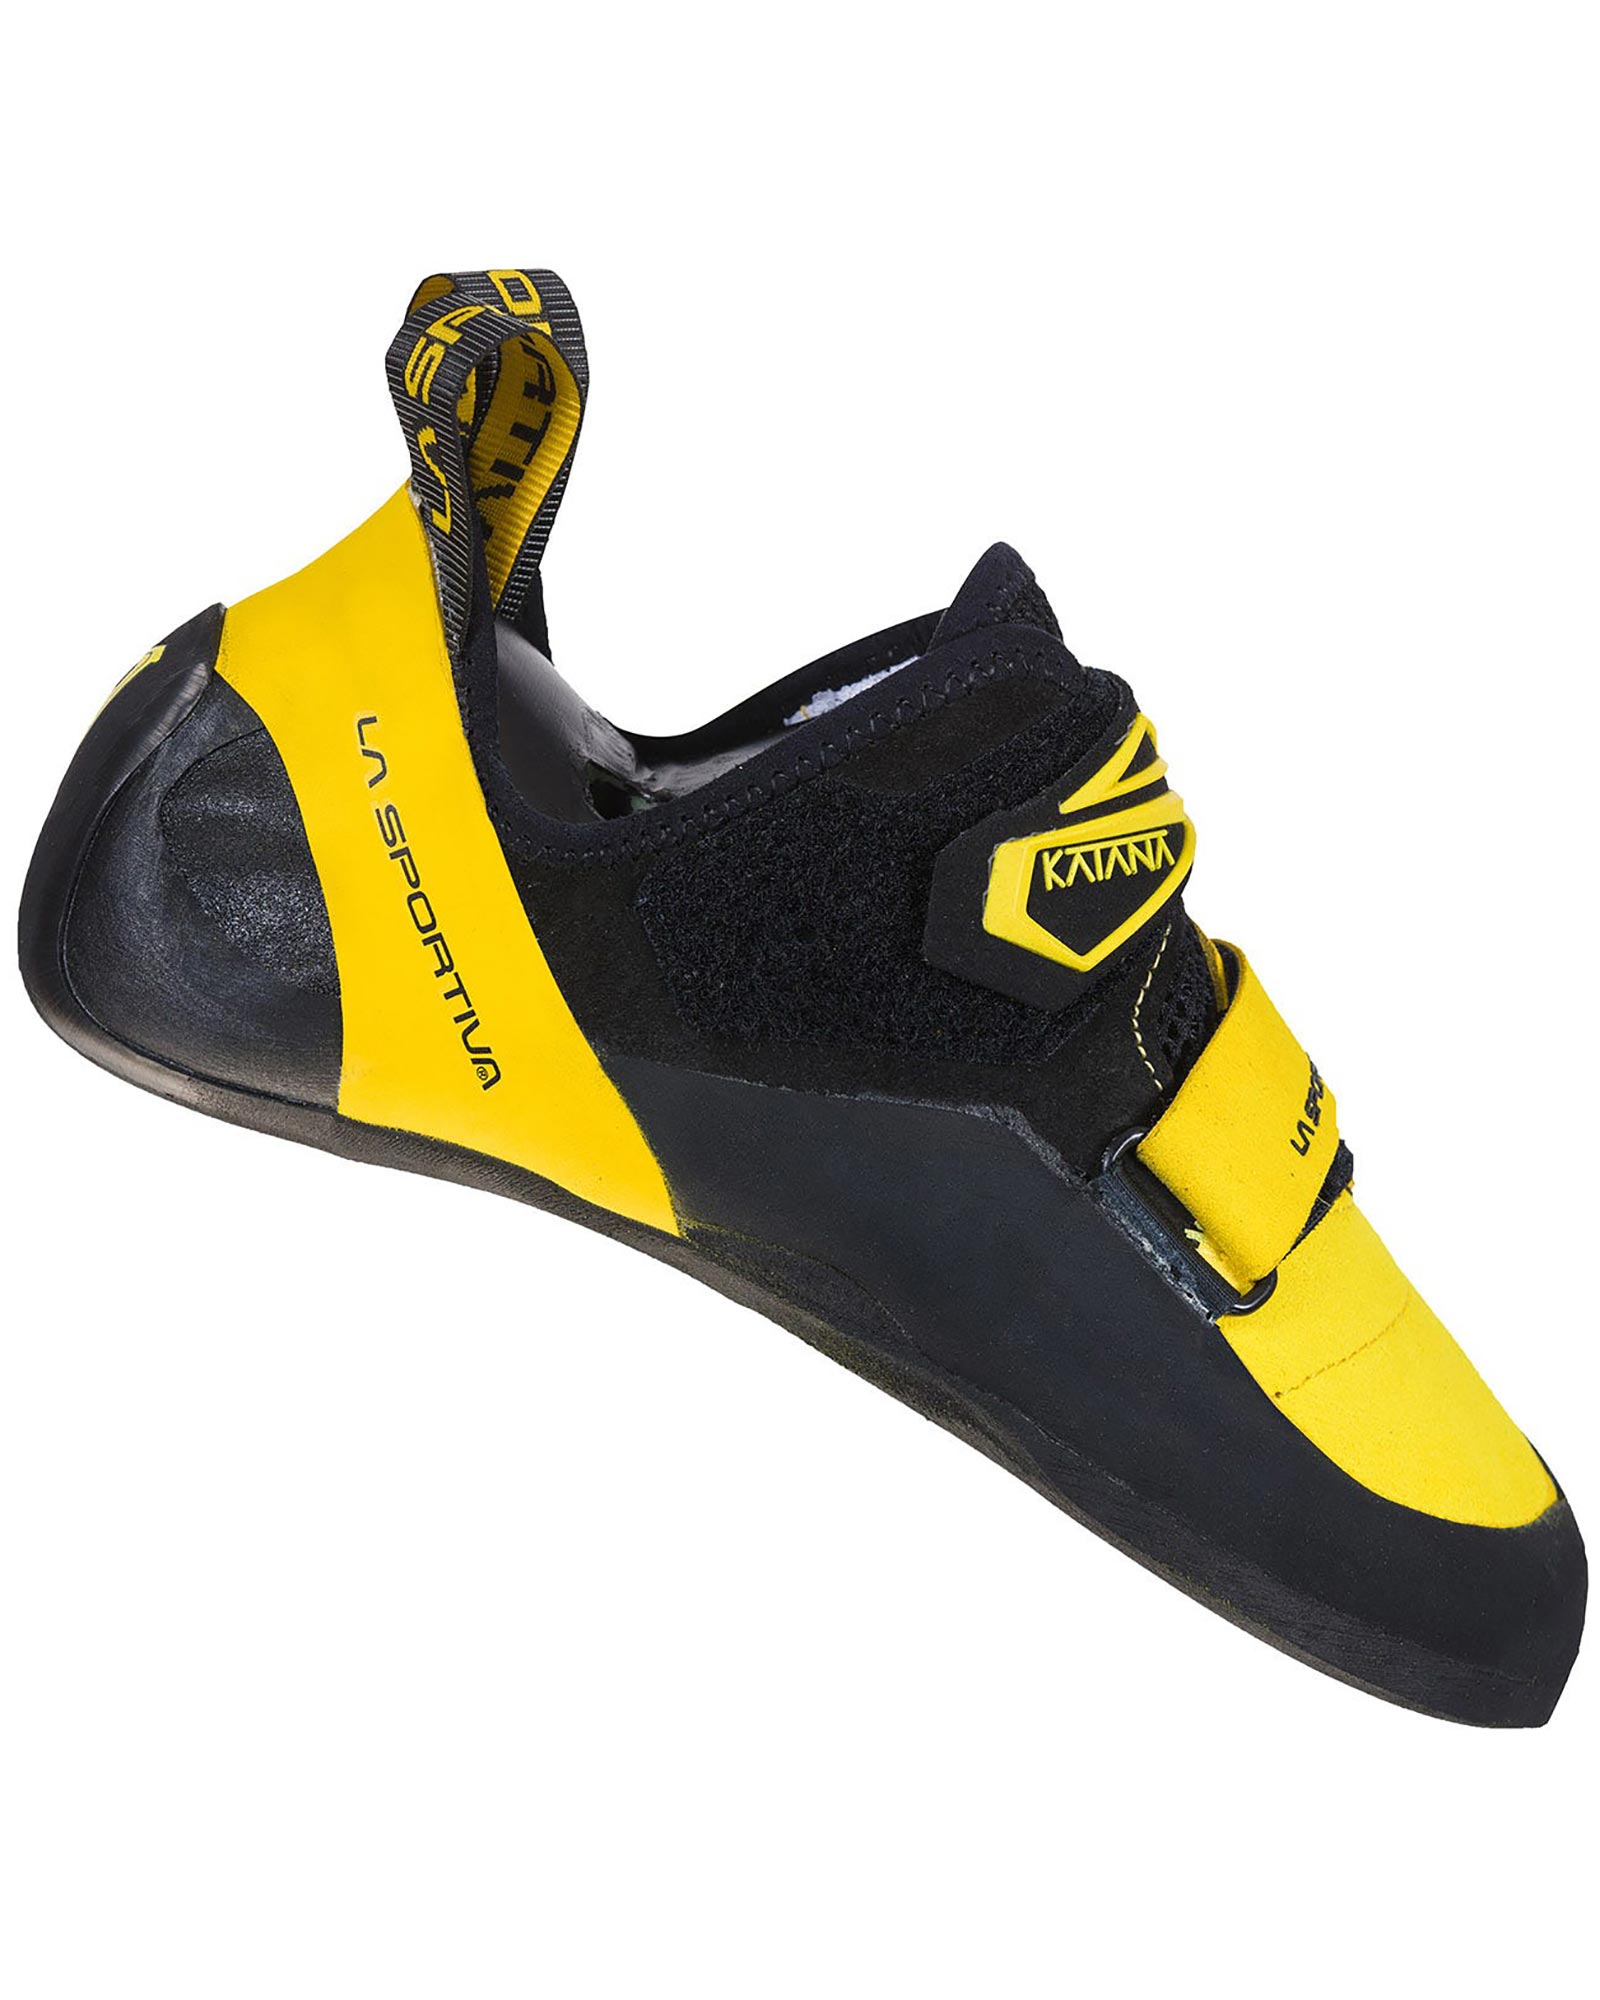 La Sportiva Katana Men’s Shoes - Yellow/Black EU 44